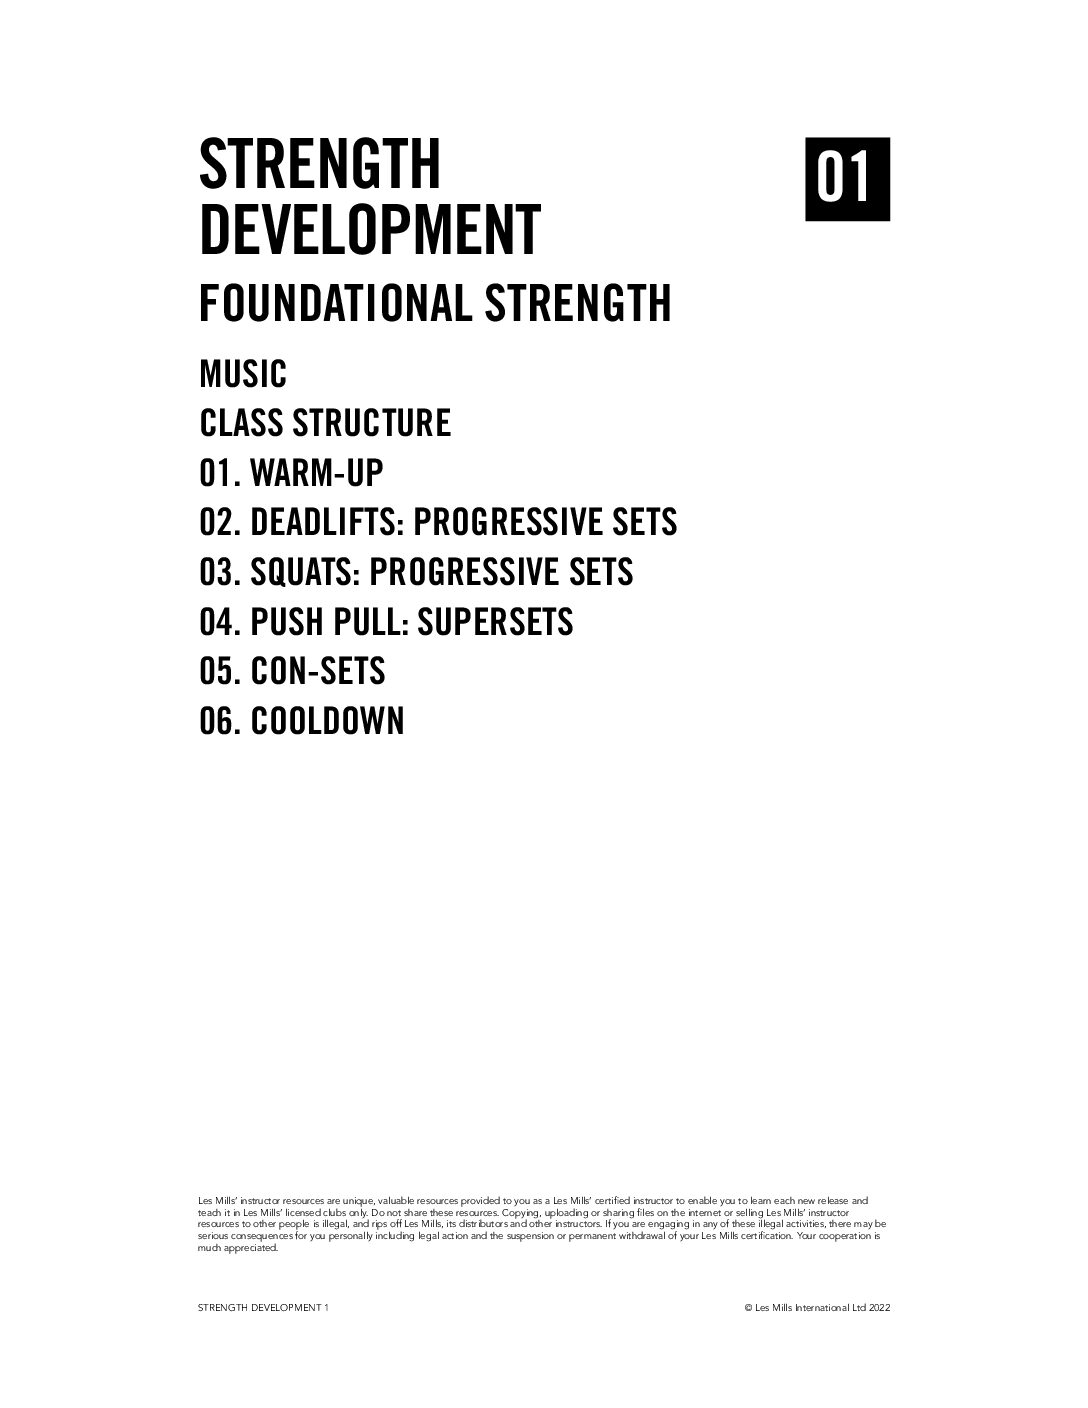 Strength Development-01